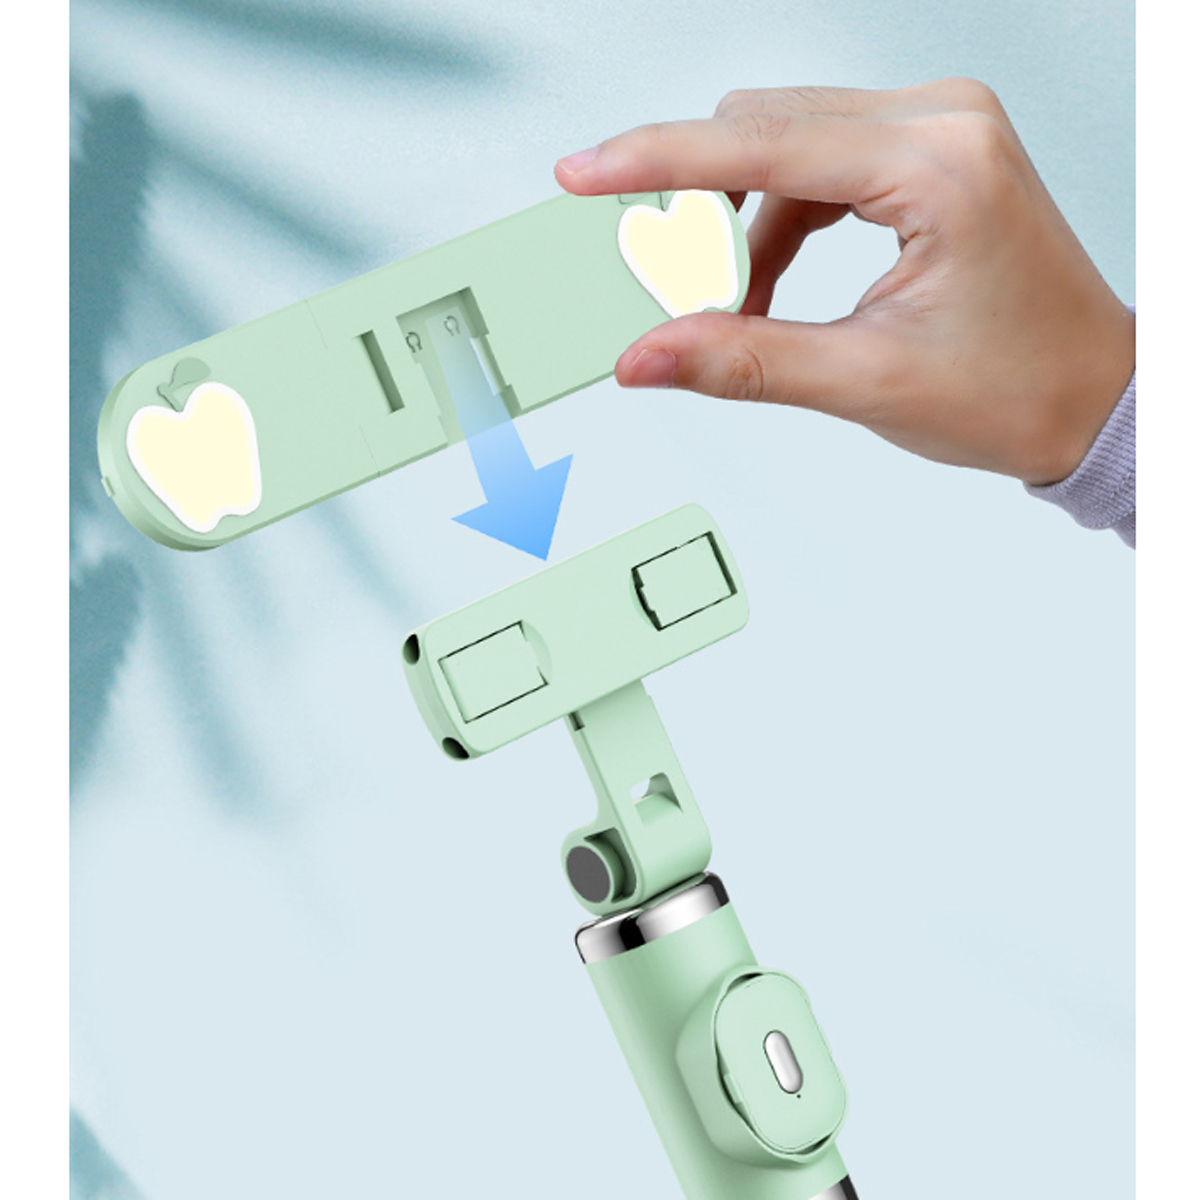 Dual Selbstauslöser, Grün Handy komplementäre Stick Selfie Multi-Funktion, ENBAOXIN Halter Fernbedienung Bluetooth Lichter -